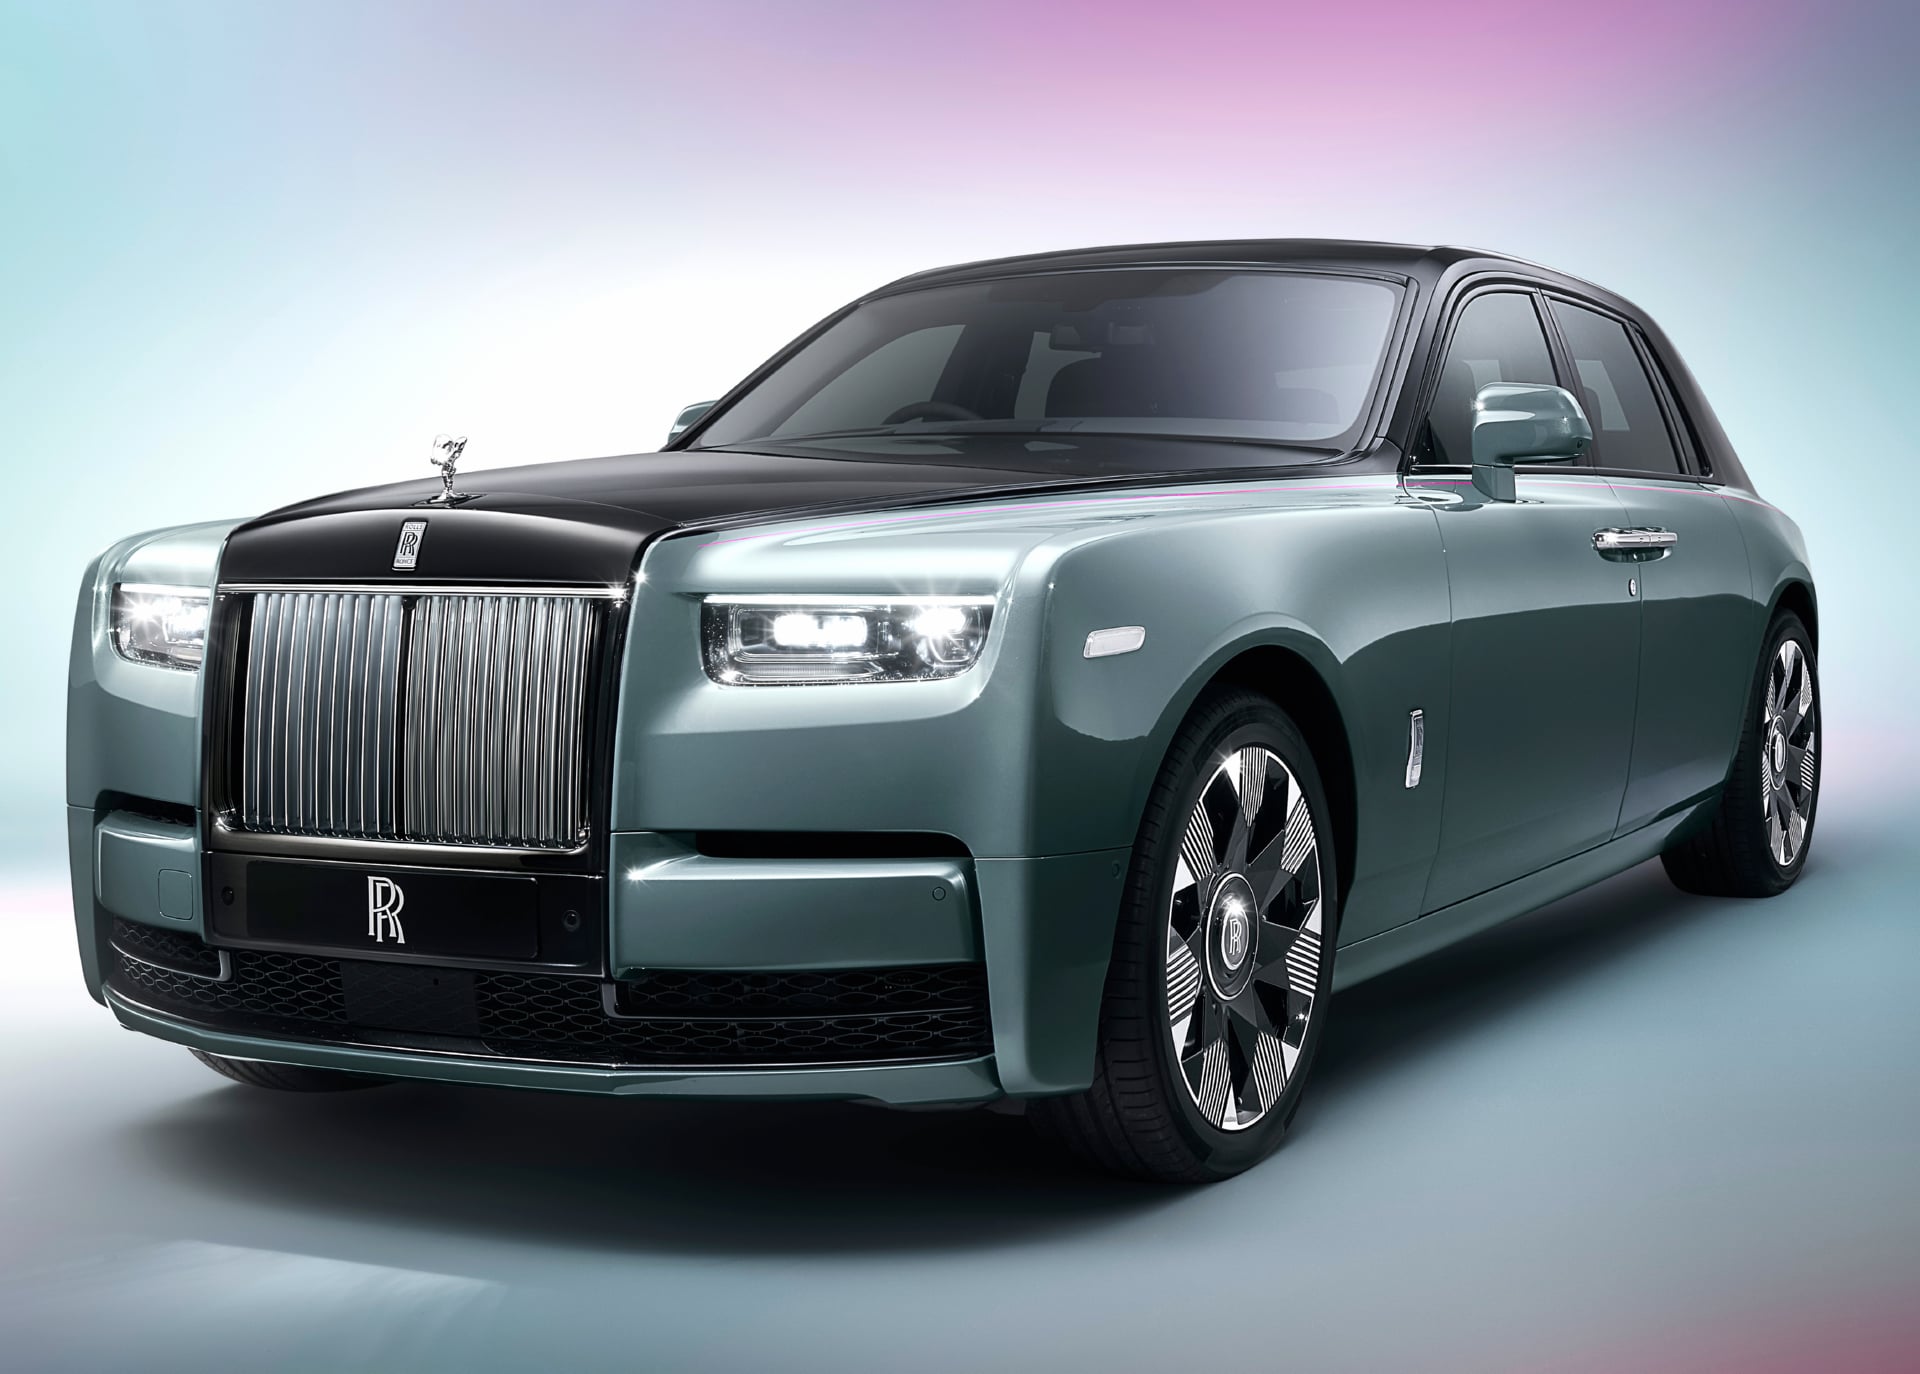 Rolls-Royce Phantom Series II at 1600 x 1200 size wallpapers HD quality